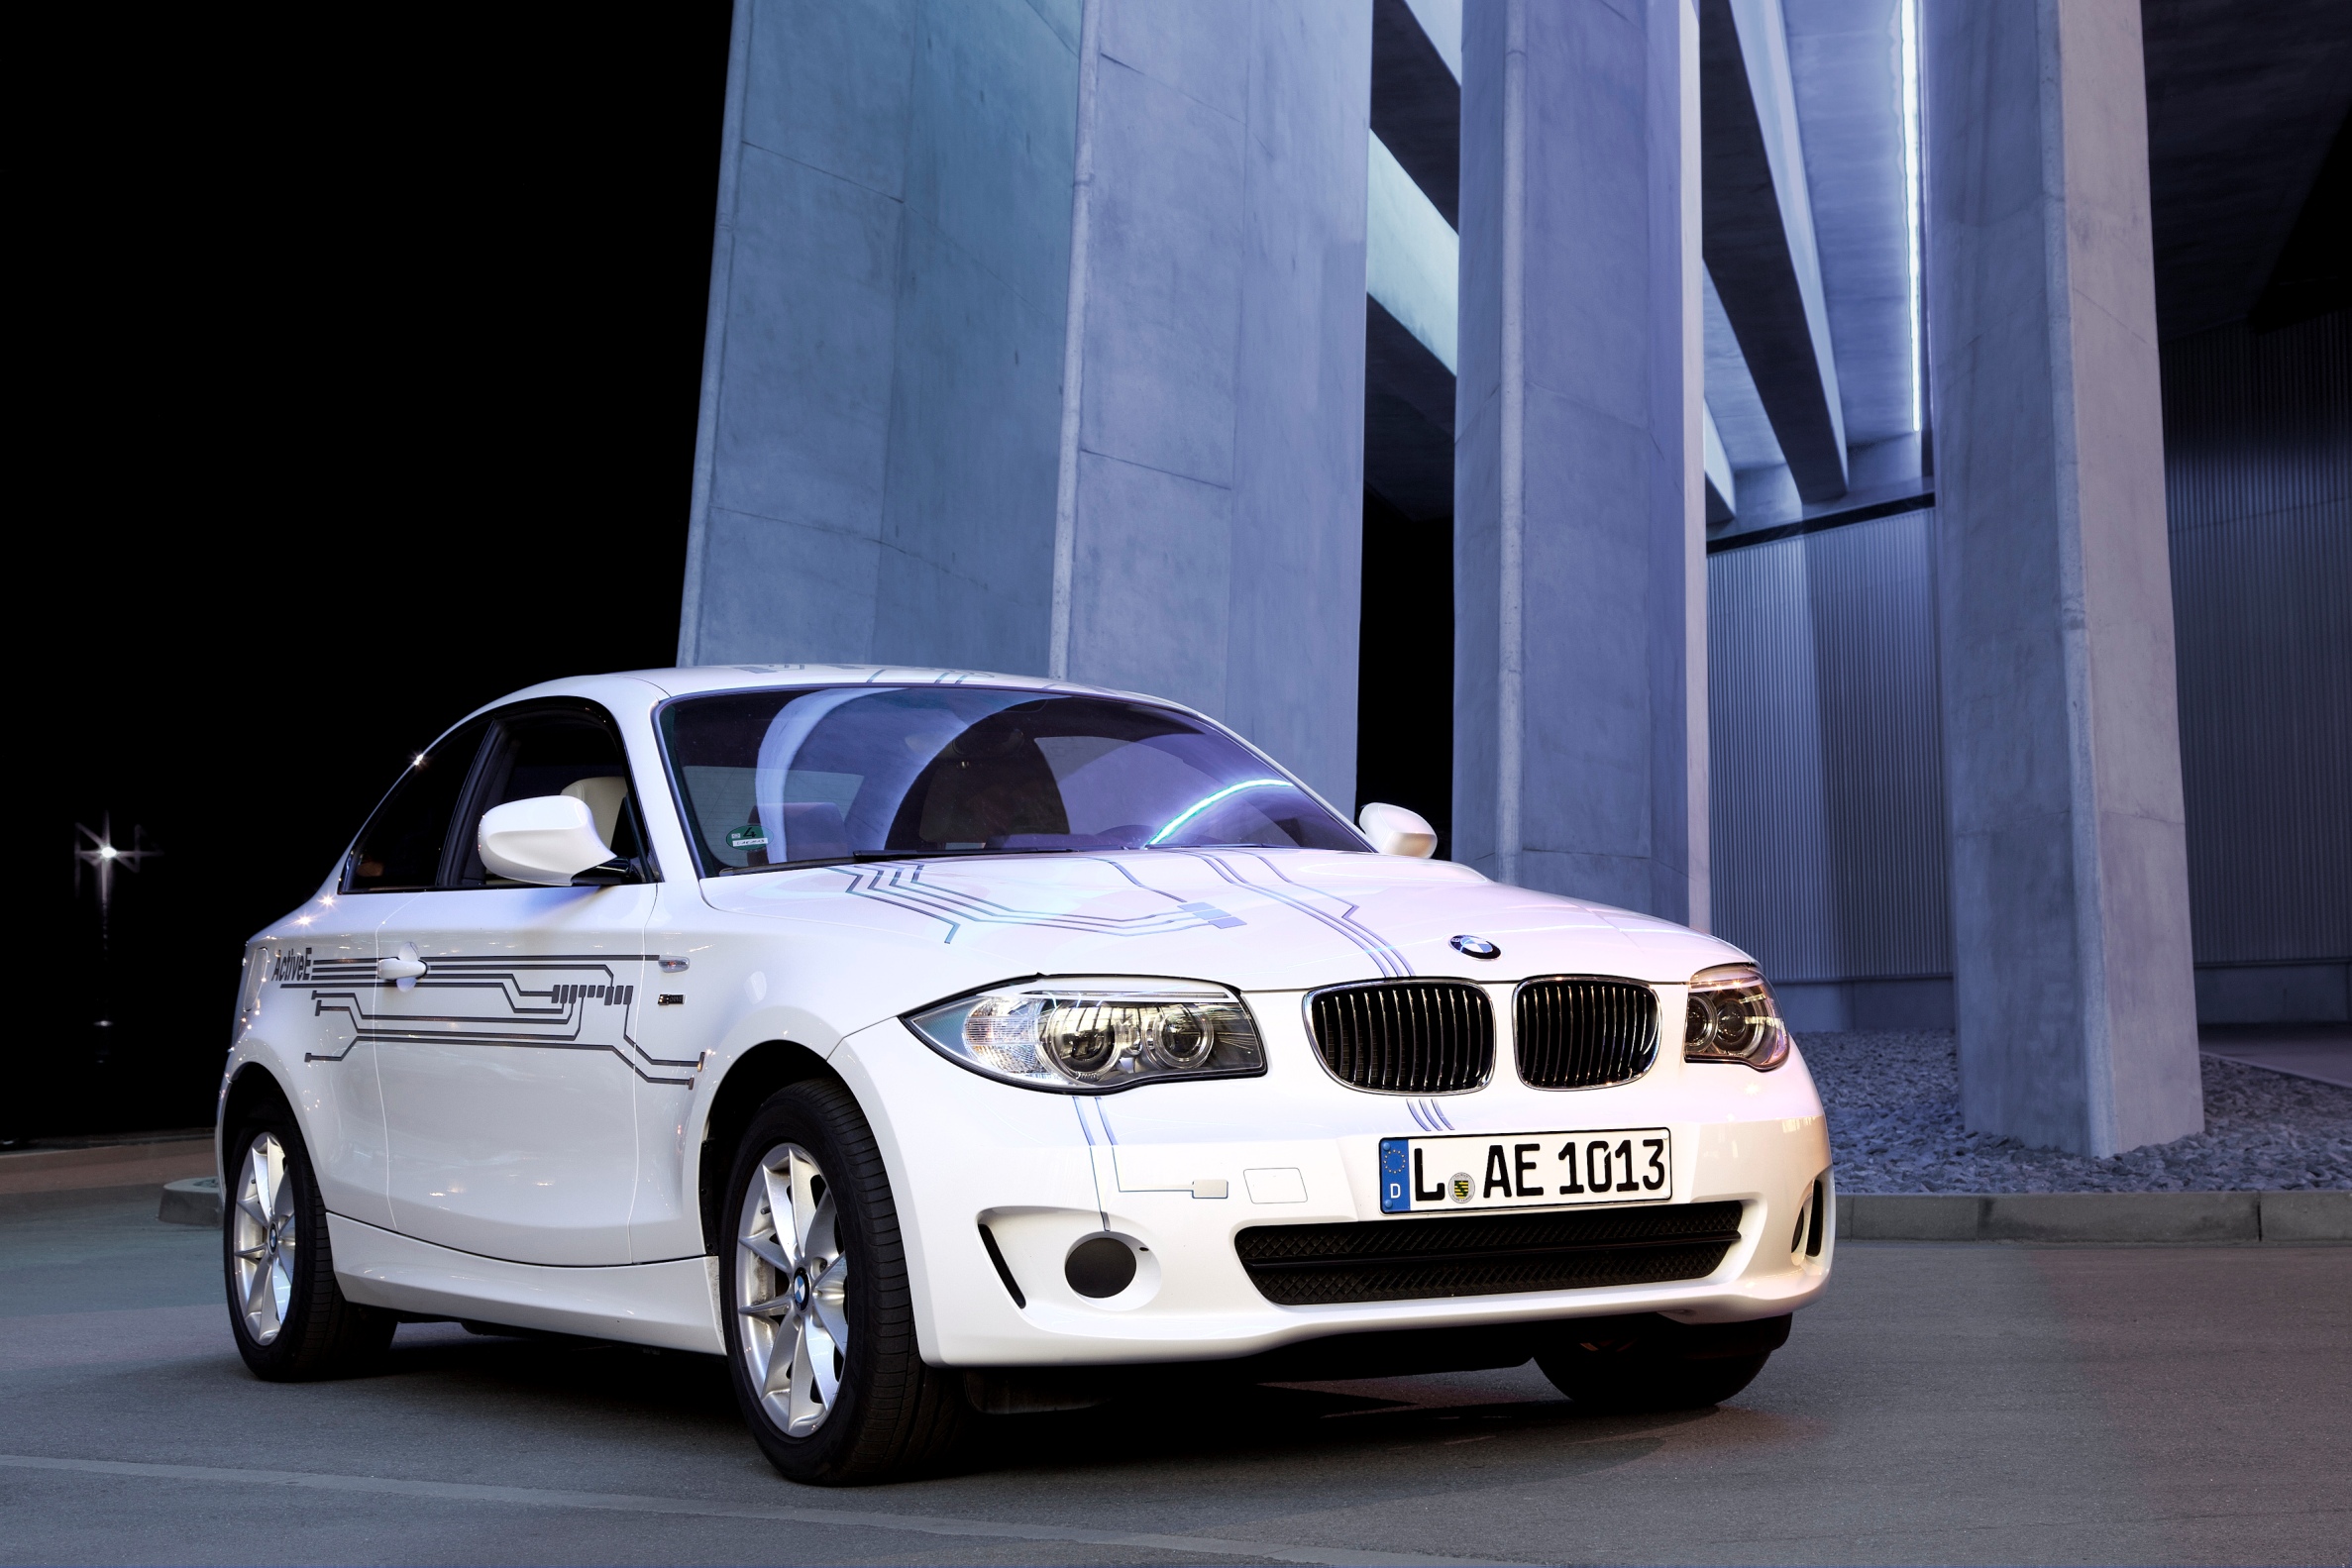 BMW ActiveE (12/2012) (Image: BMW Group)